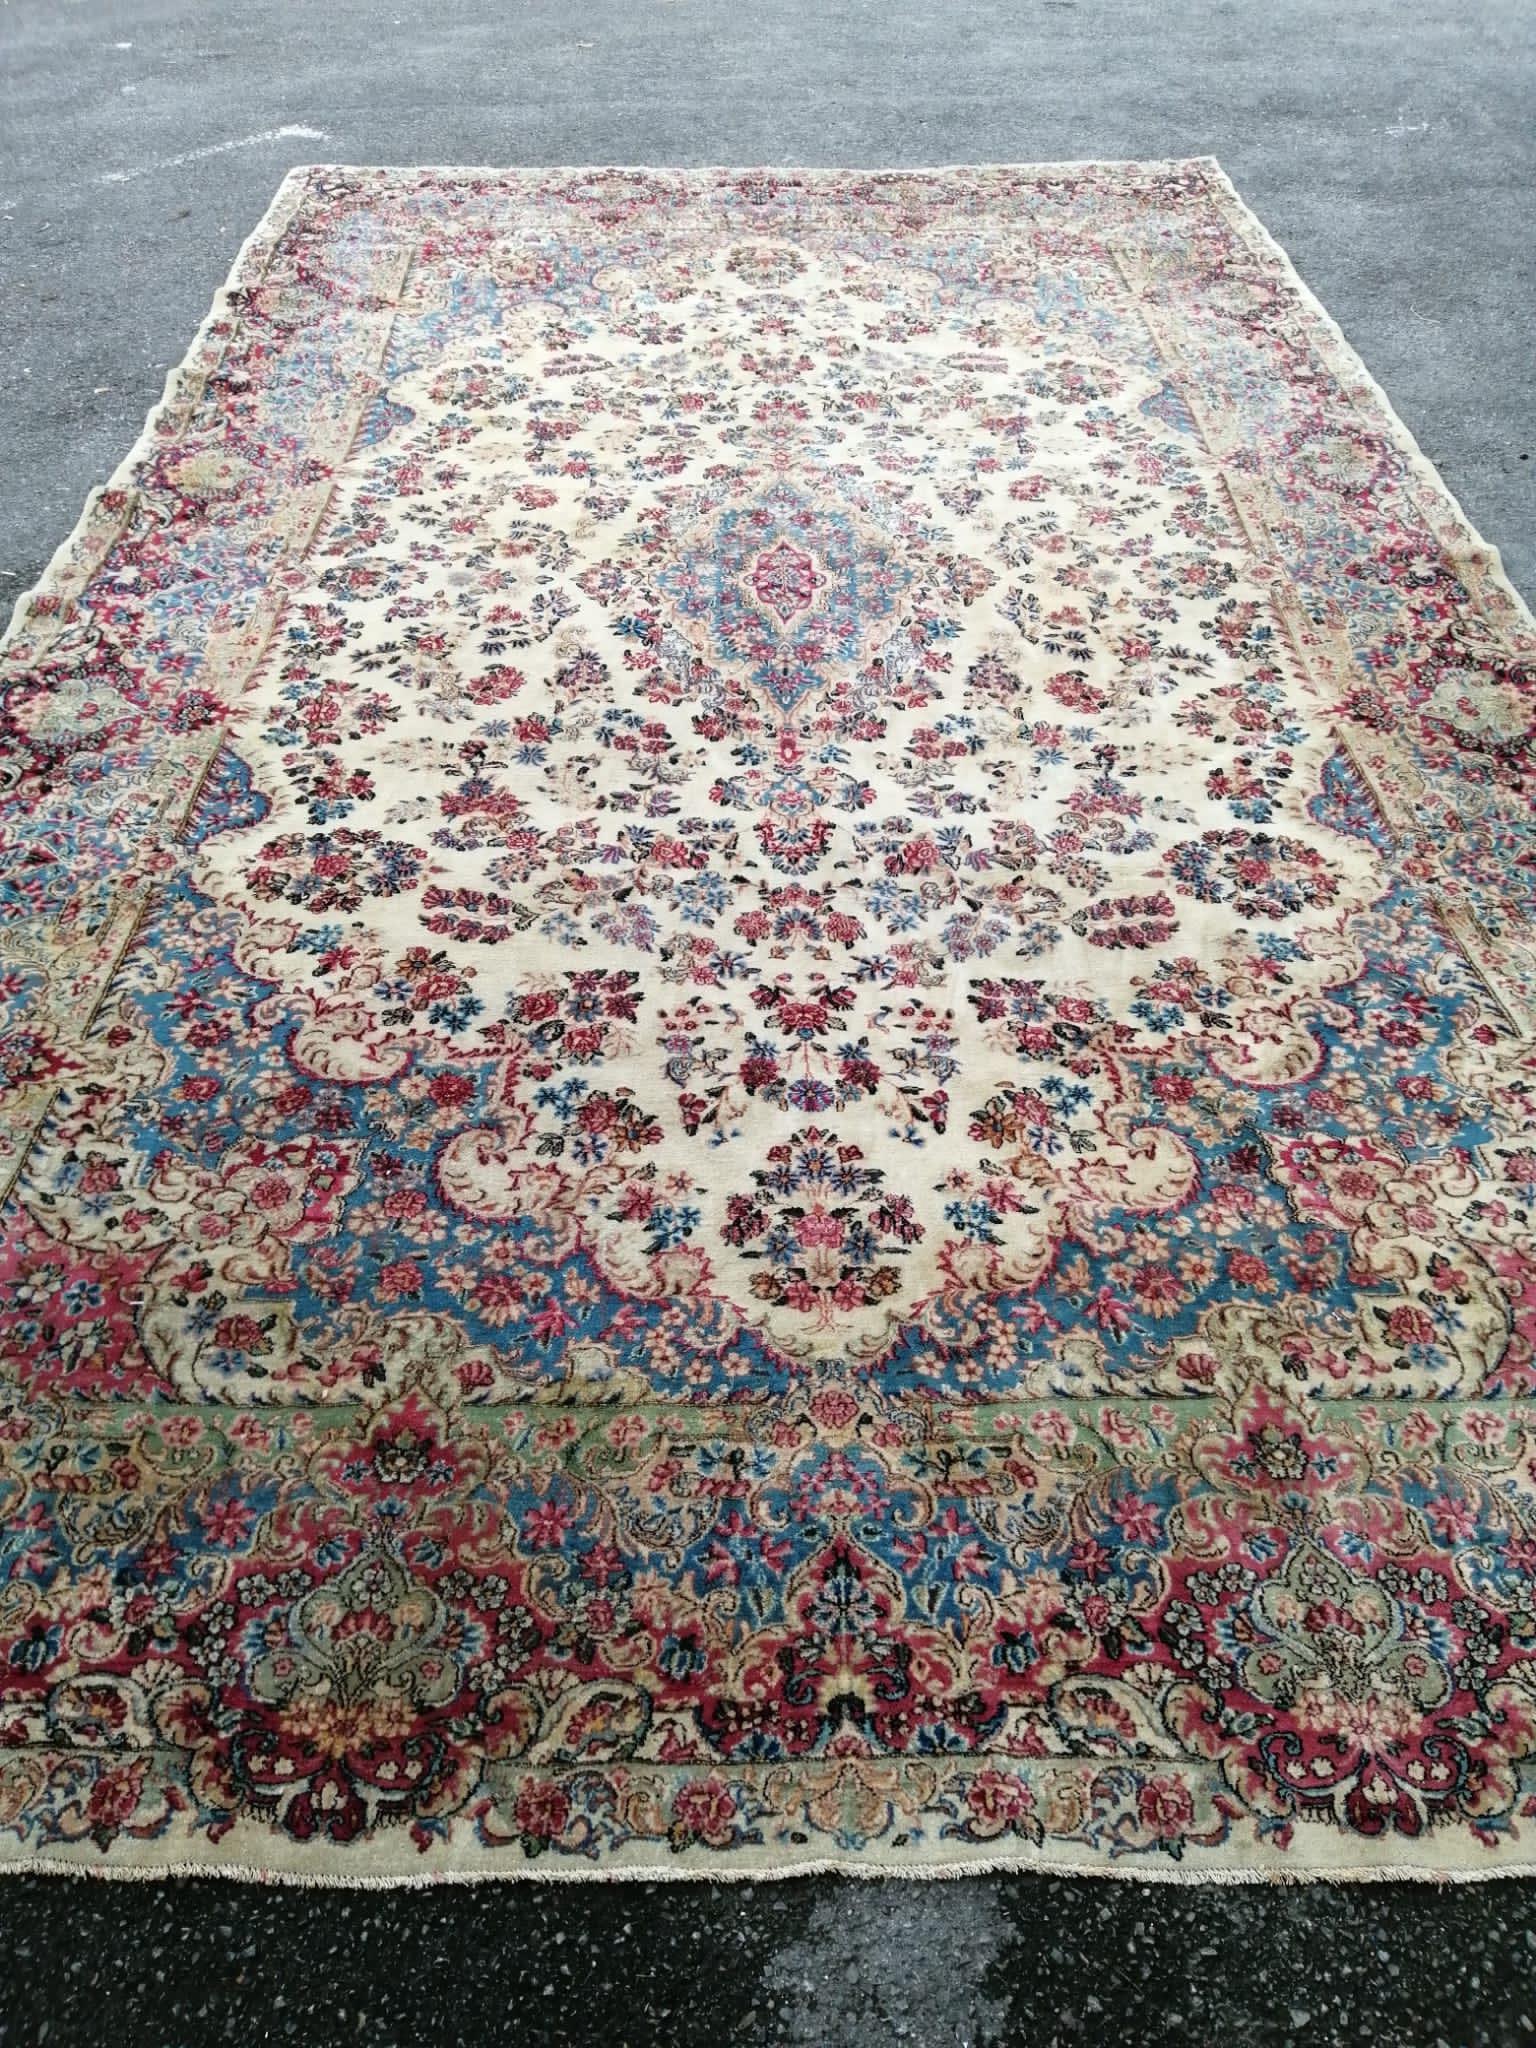 A large Tabriz ivory ground floral carpet, 500 x 300cm